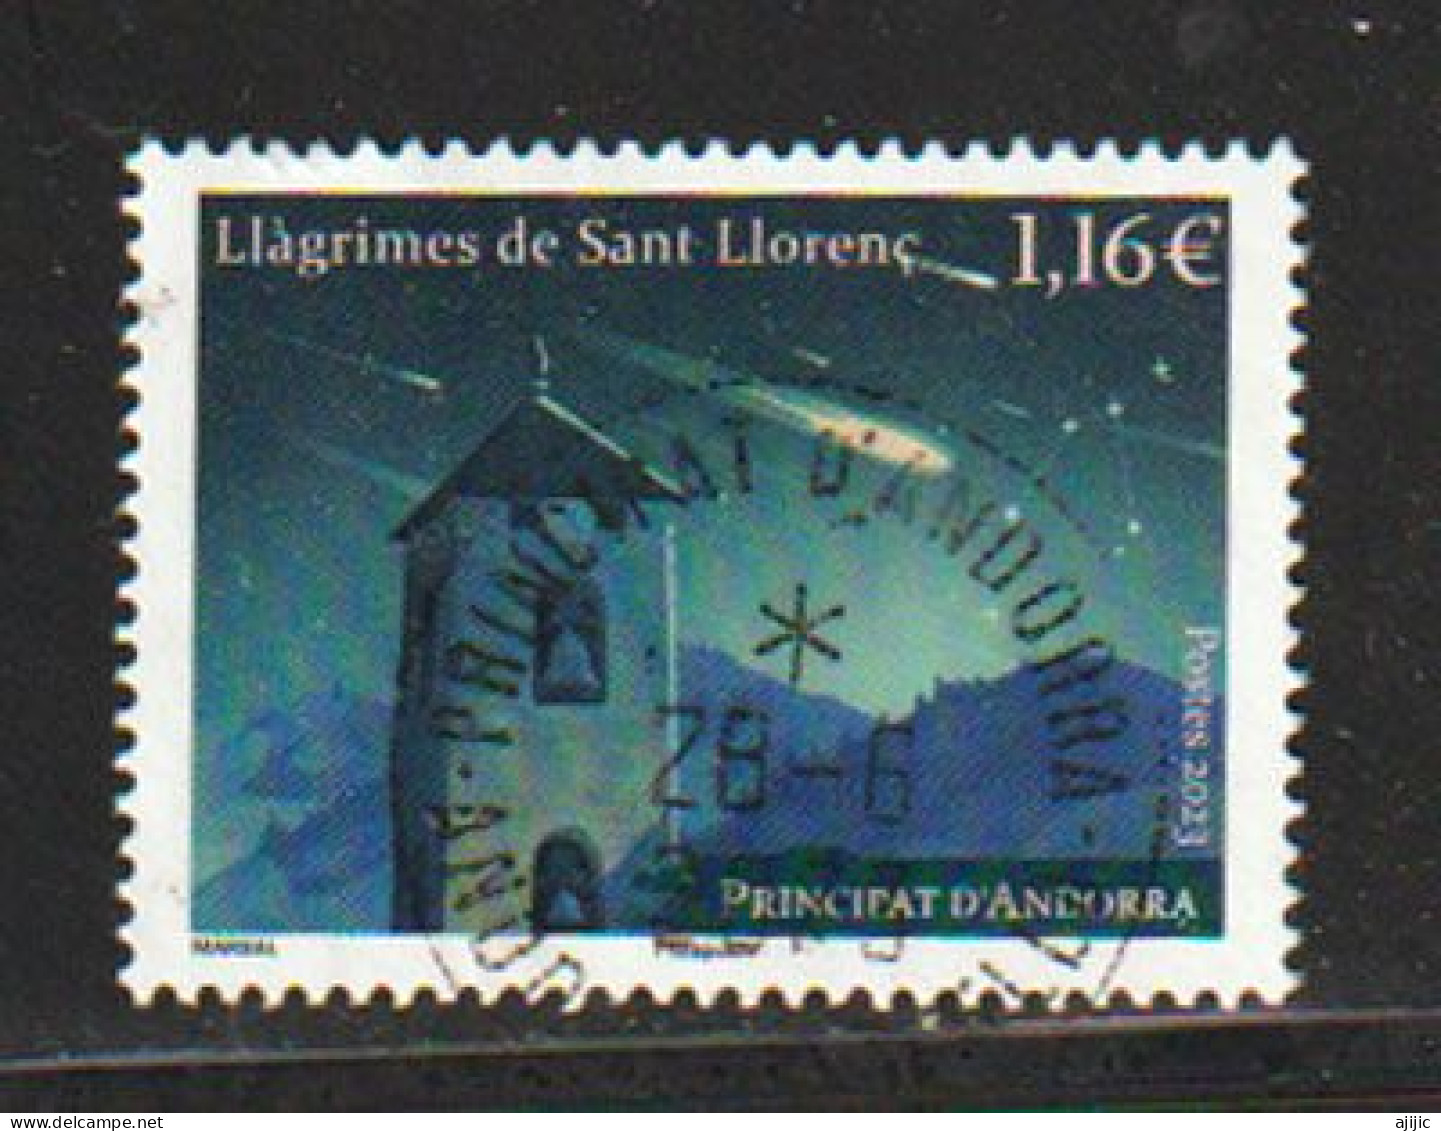 ANDORRA.. Llagrimes De Sant Llorenc (Espectacular Lluvia De Estrellas Nocturna) Perseidas. Sello Cancelado 1ª Calidad - Usados